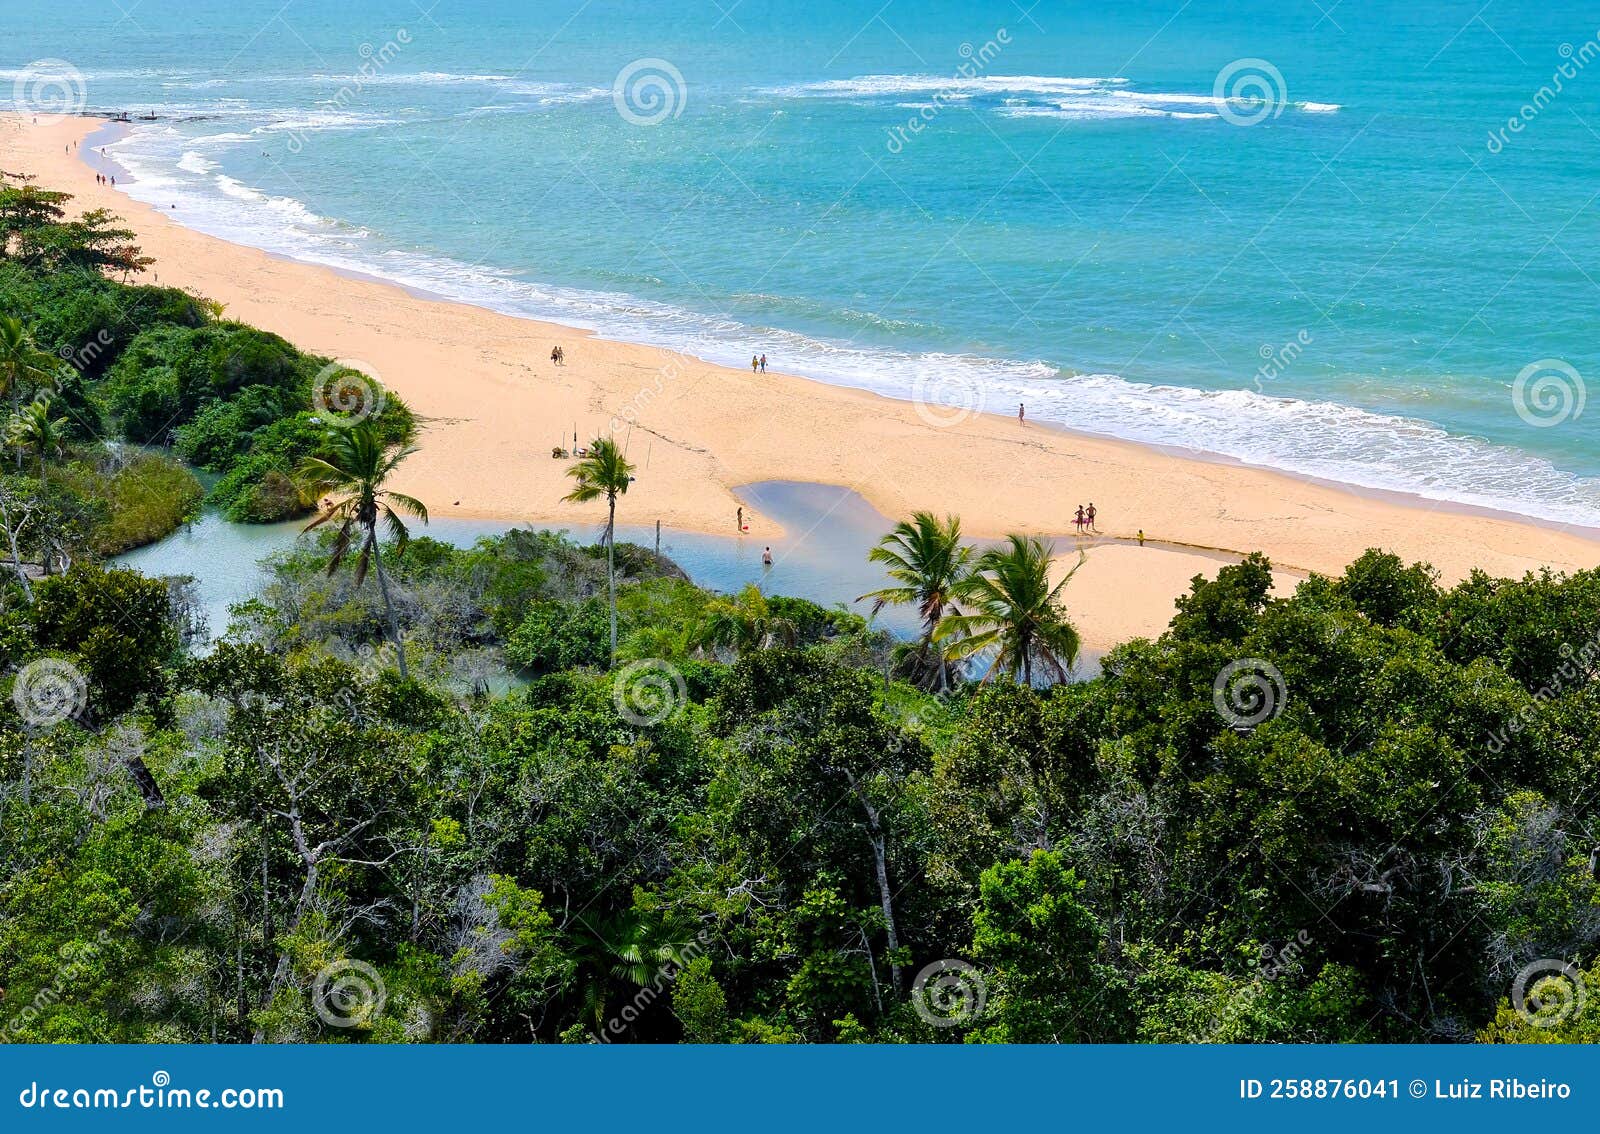 arraial d`ajuda district of the brazilian municipality of porto seguro, on the coast of the state of bahia